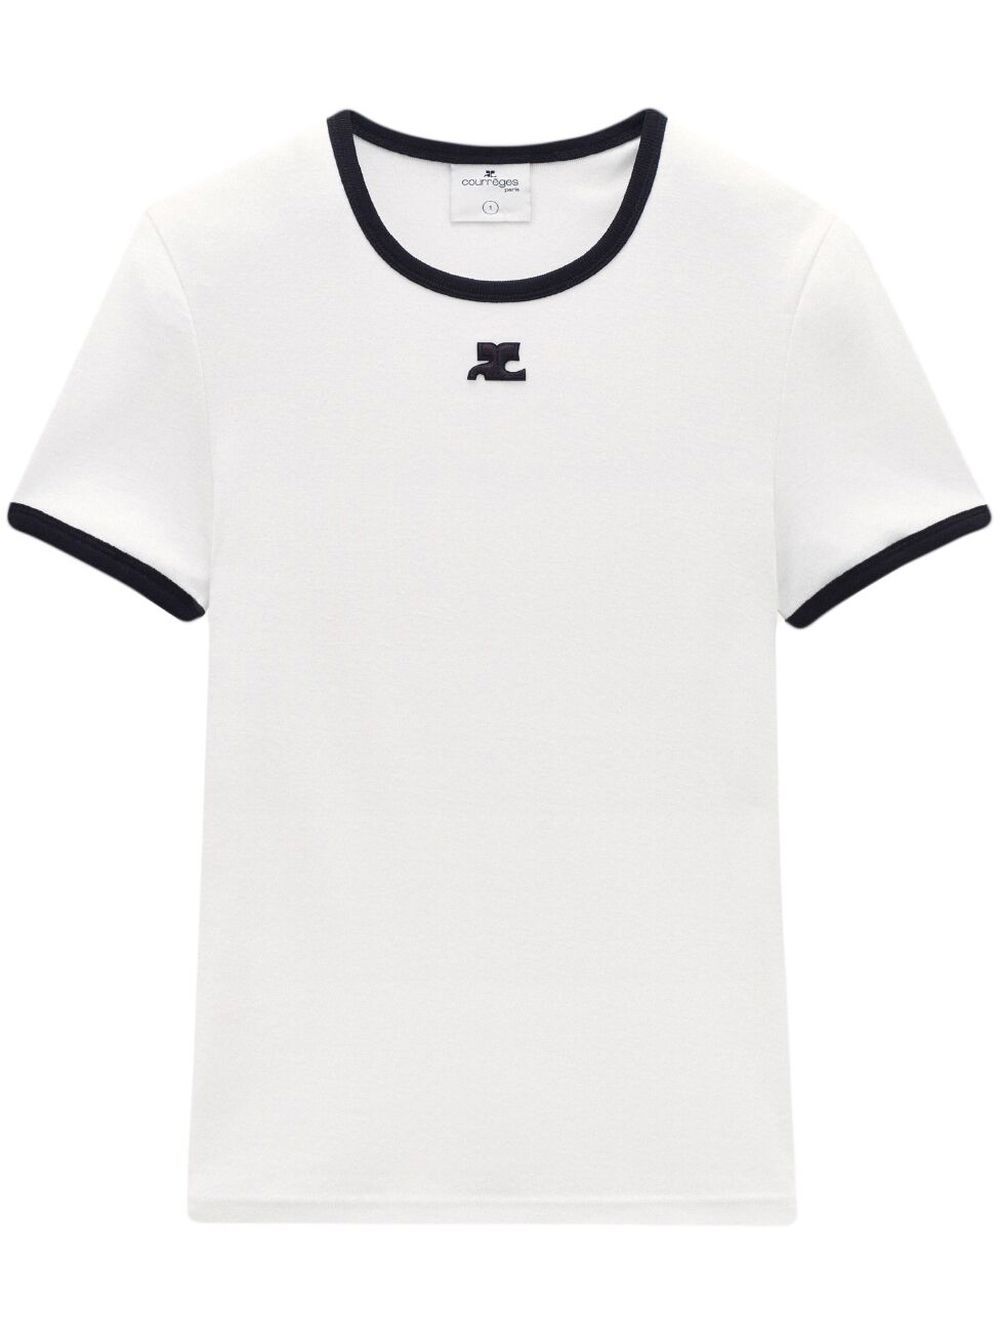 T-shirt bianca contrasti neri